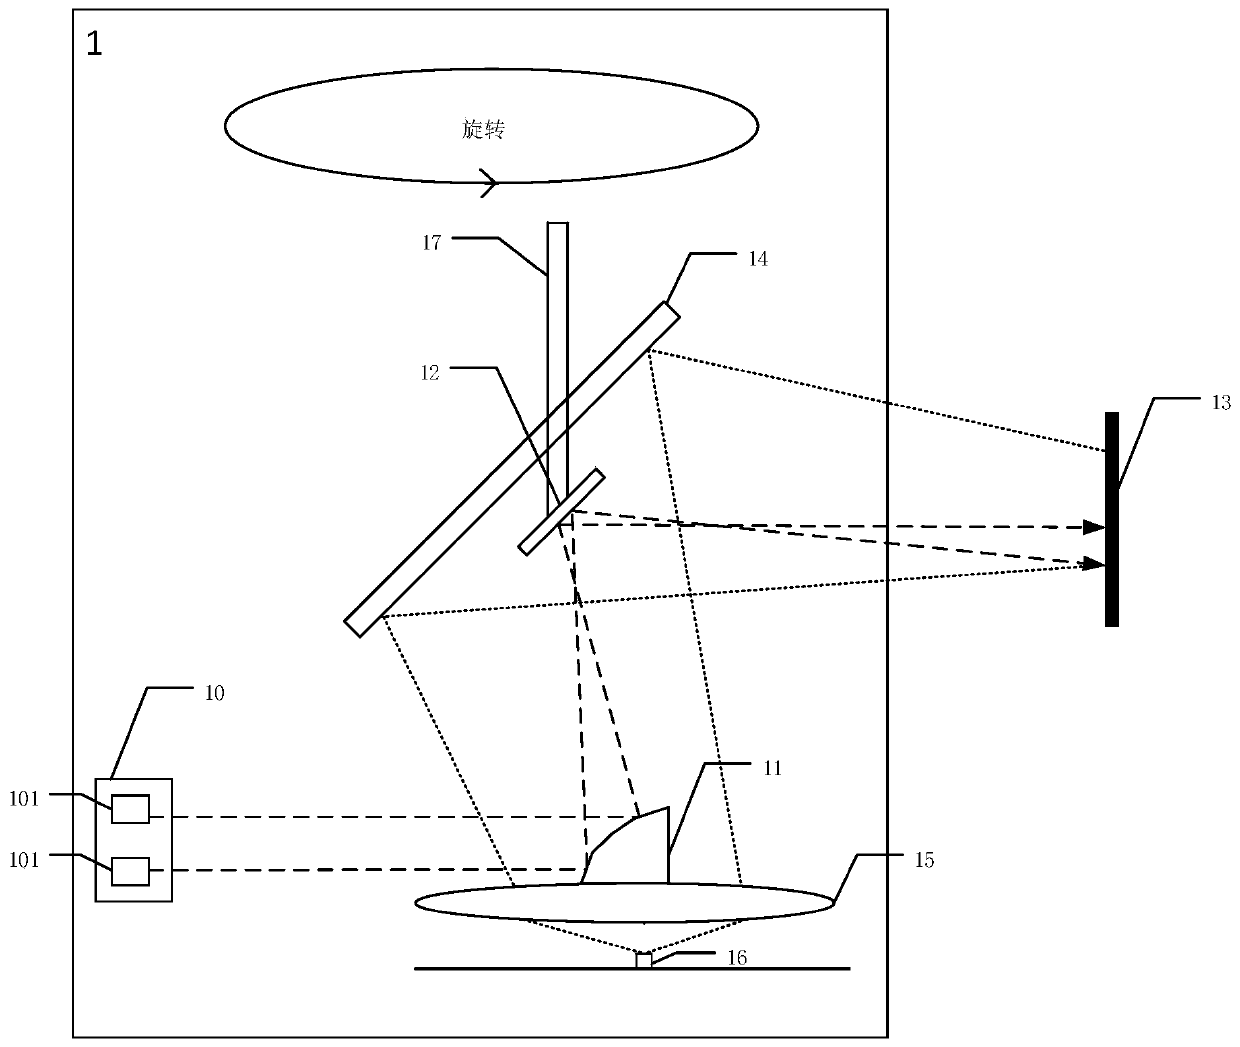 Multi-line laser radar